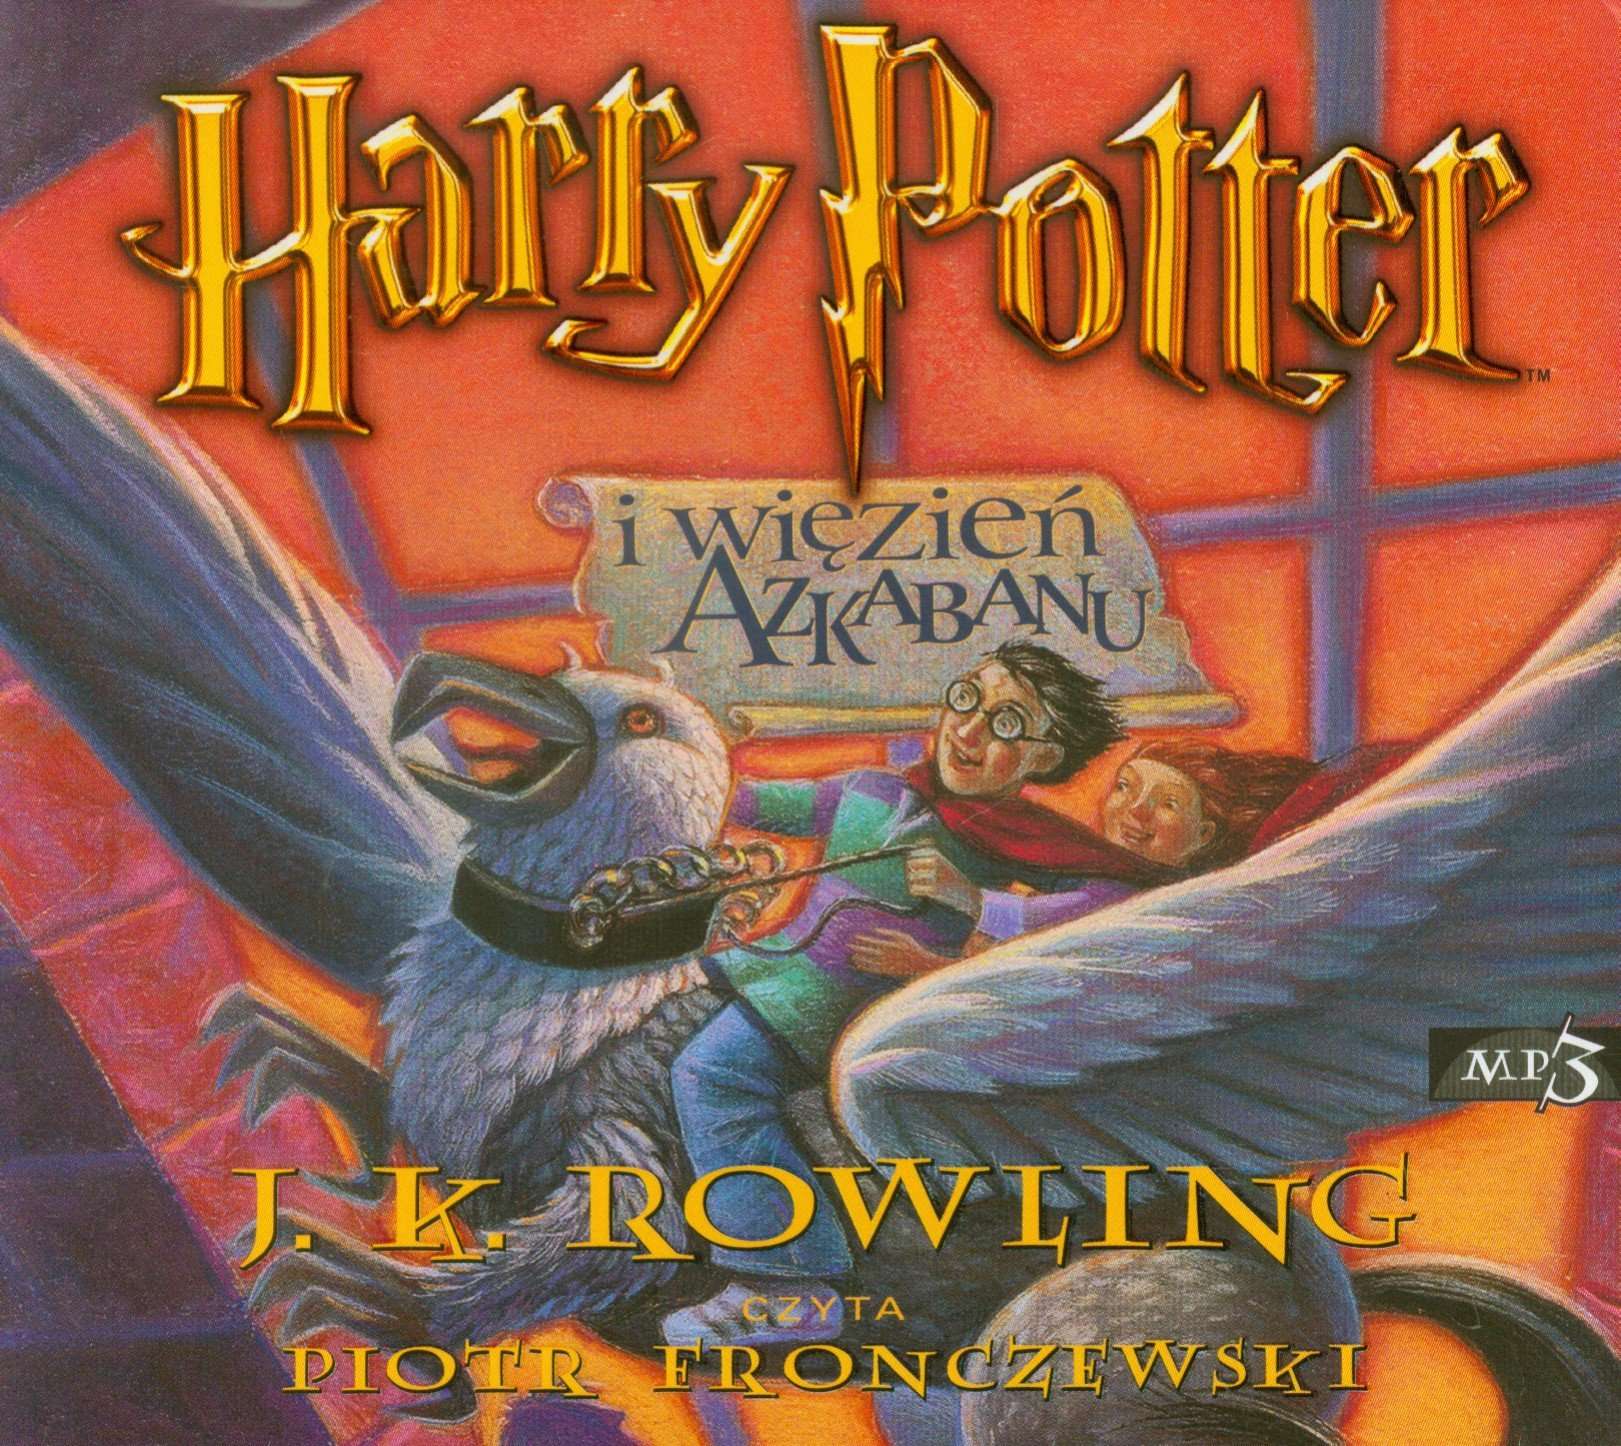 Harry potter i wizie azkabanu audiobook za darmo ...